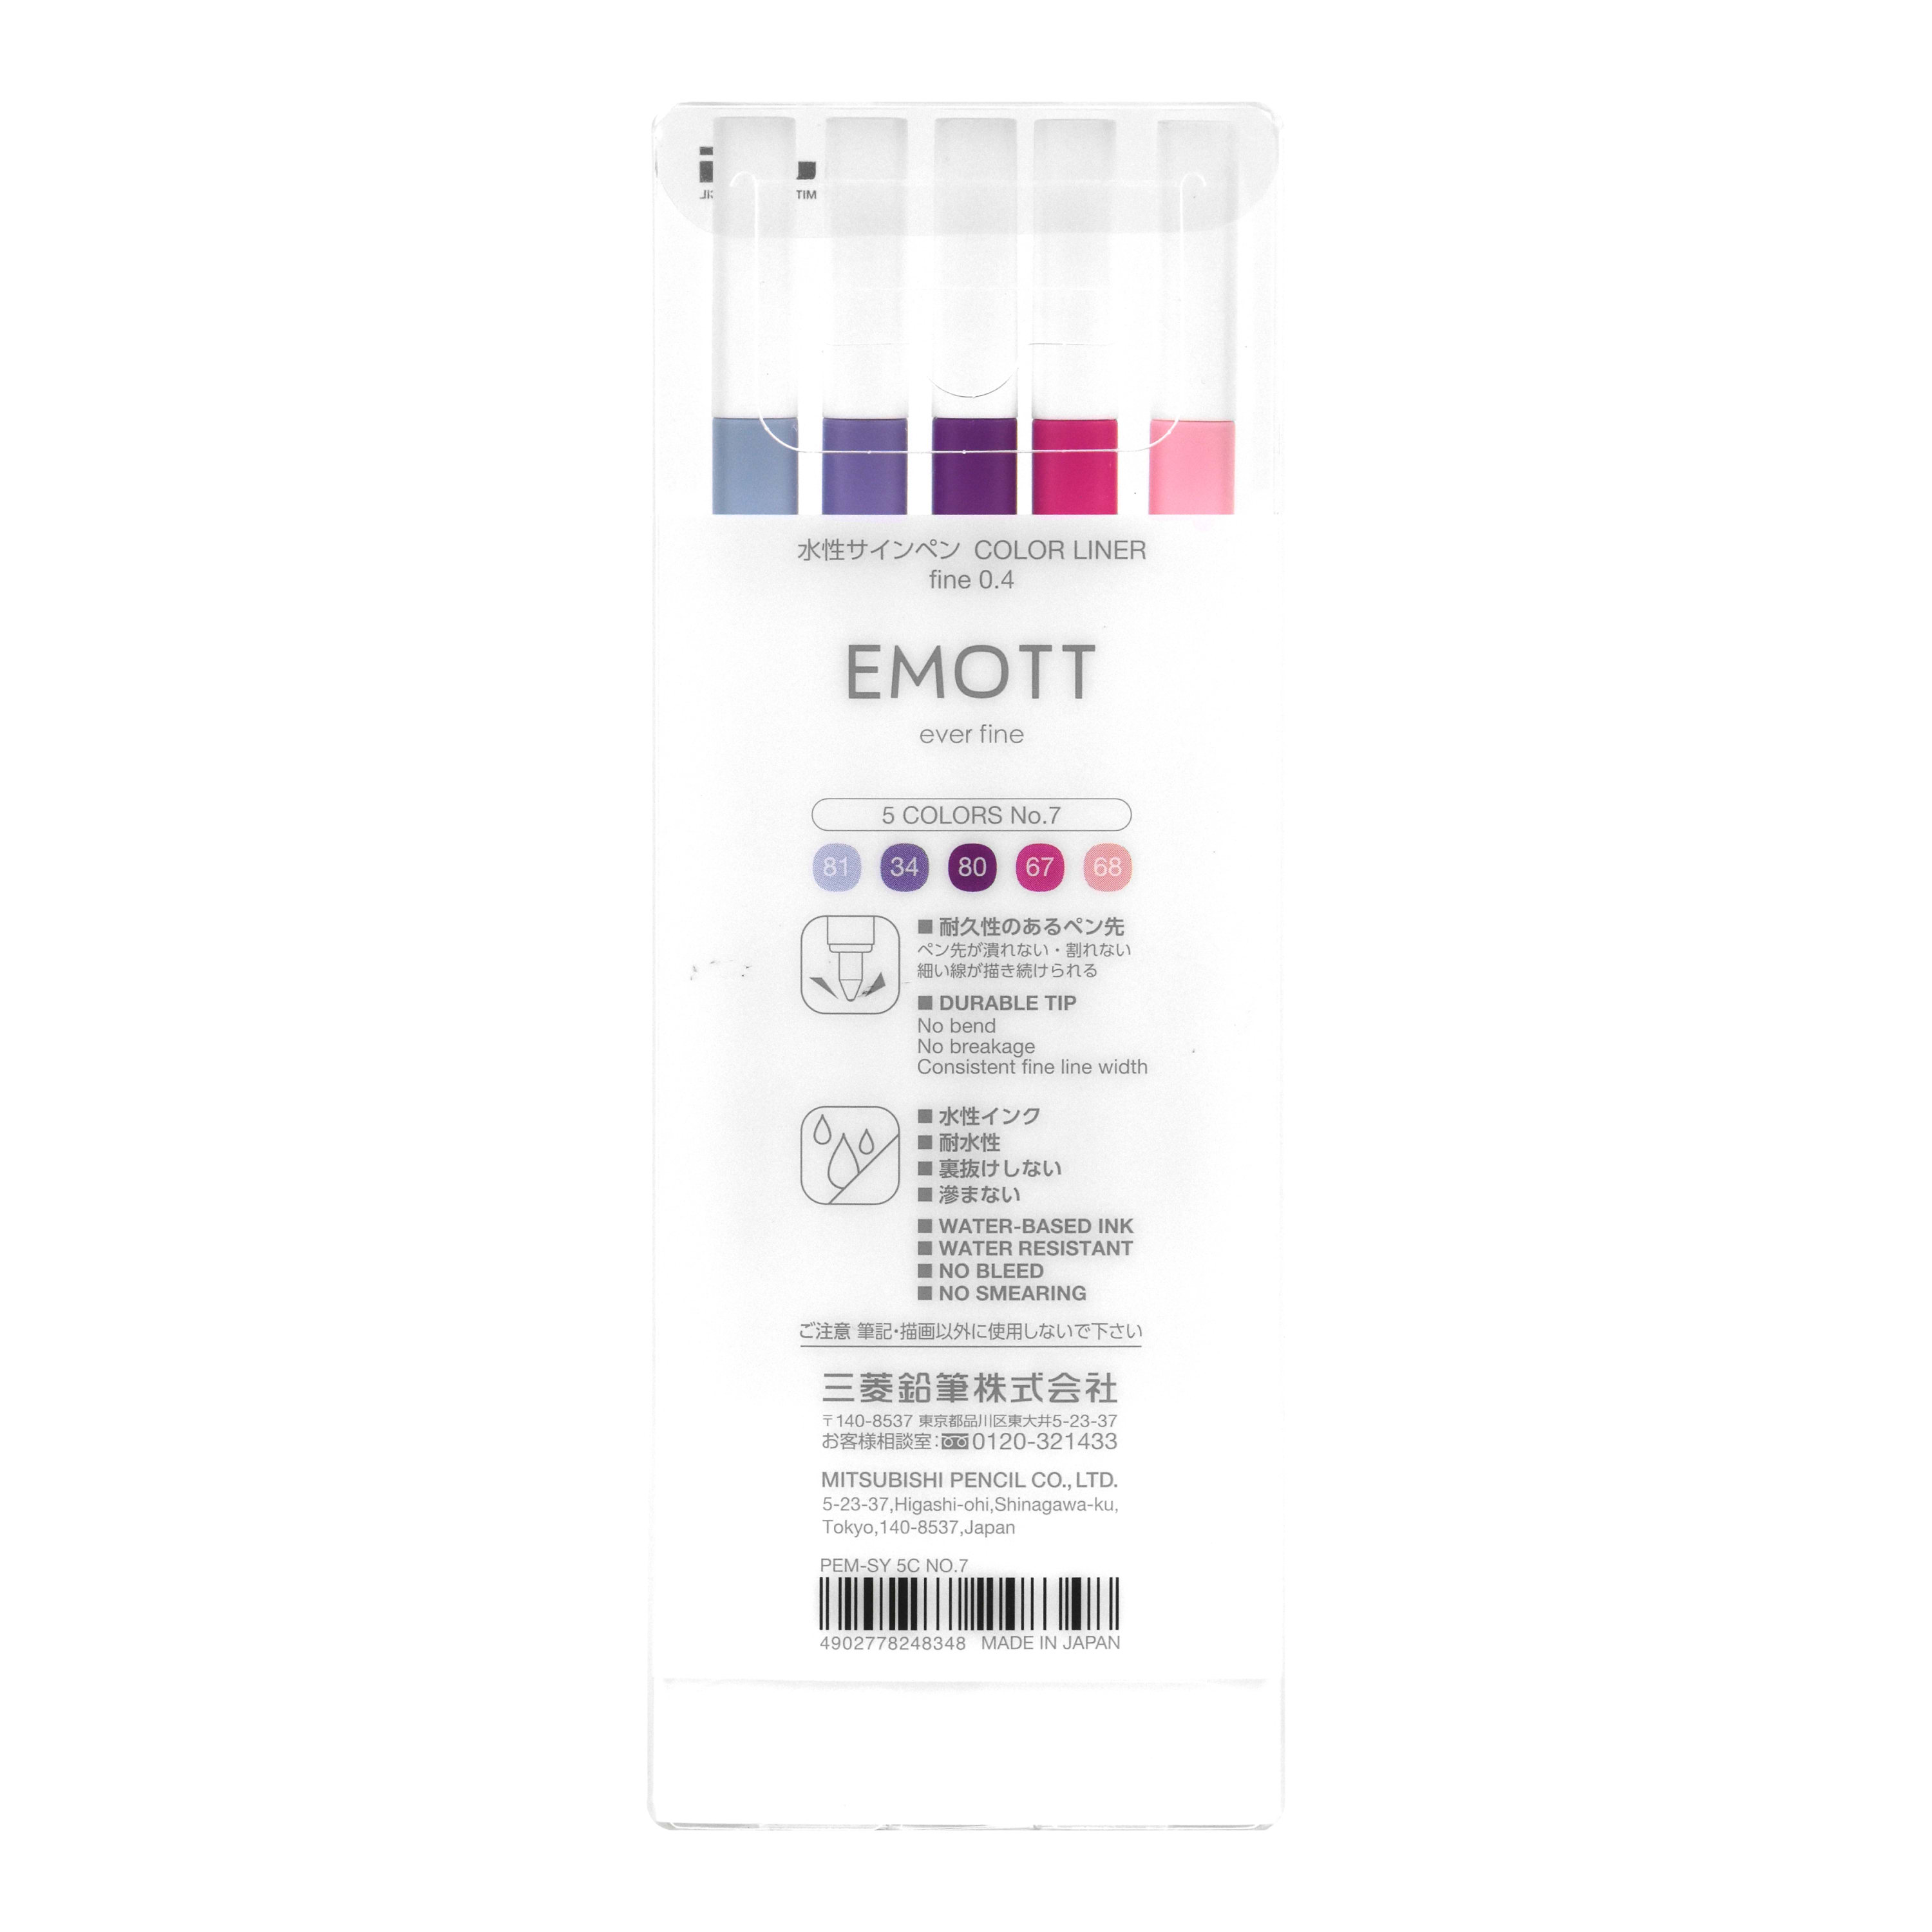 Uniball EMOTT Fine Line Marker Pens, Fine Point (0.4mm), Floral Colors, 5 Count - image 3 of 12